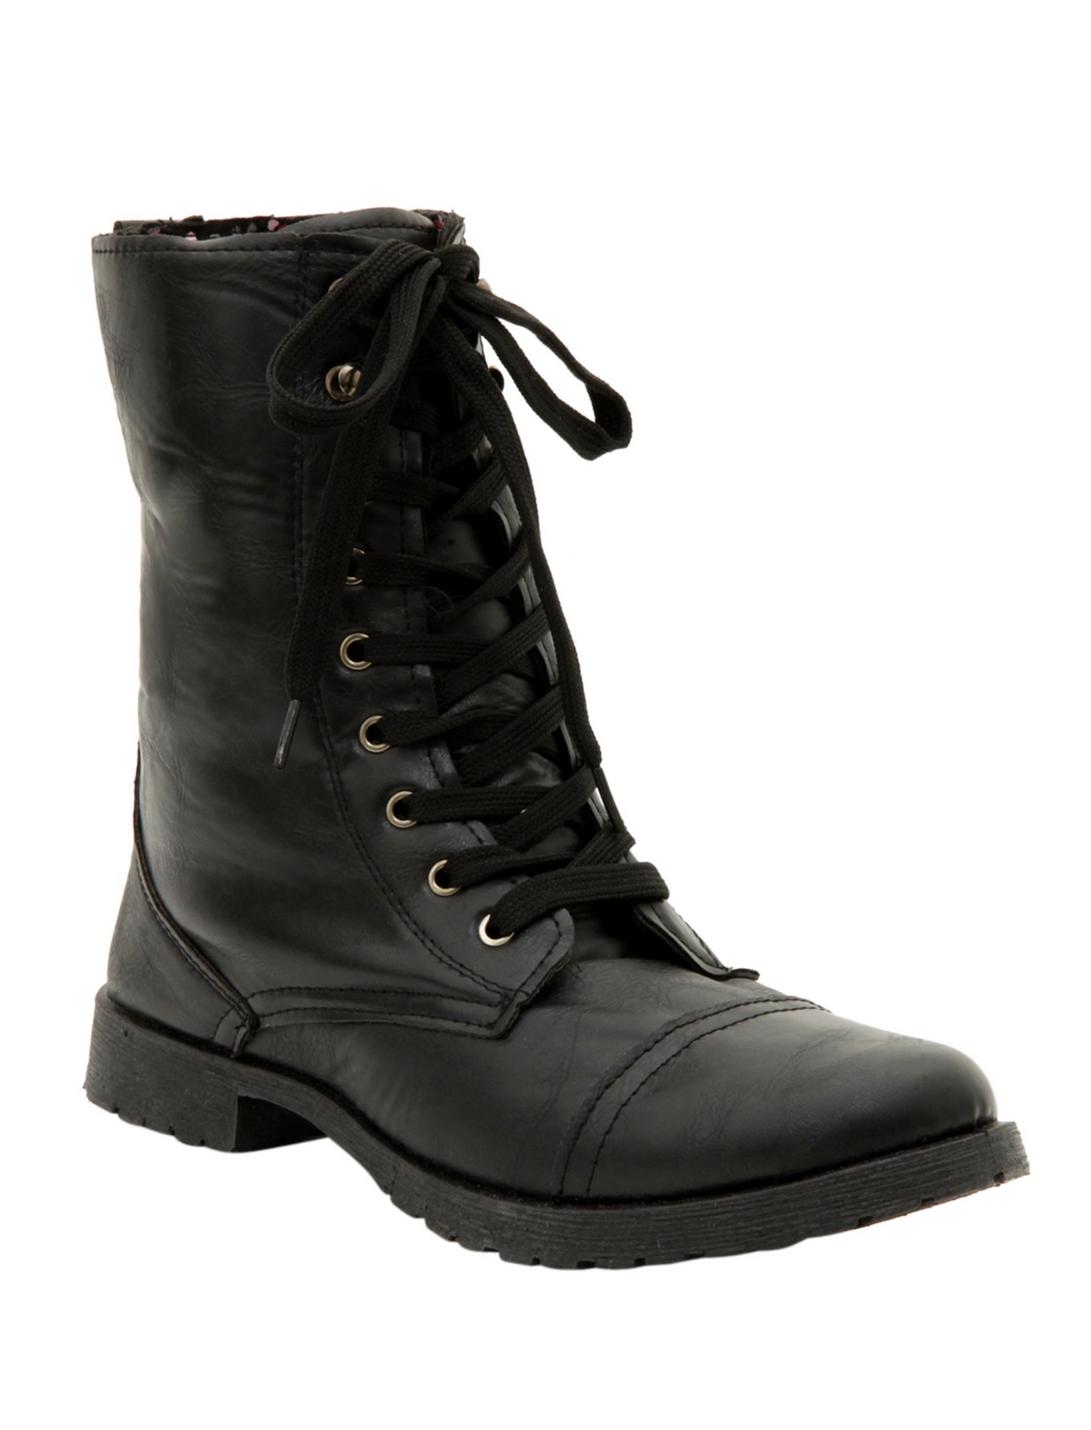 Black Floral Lined Combat Boots, BLACK, hi-res